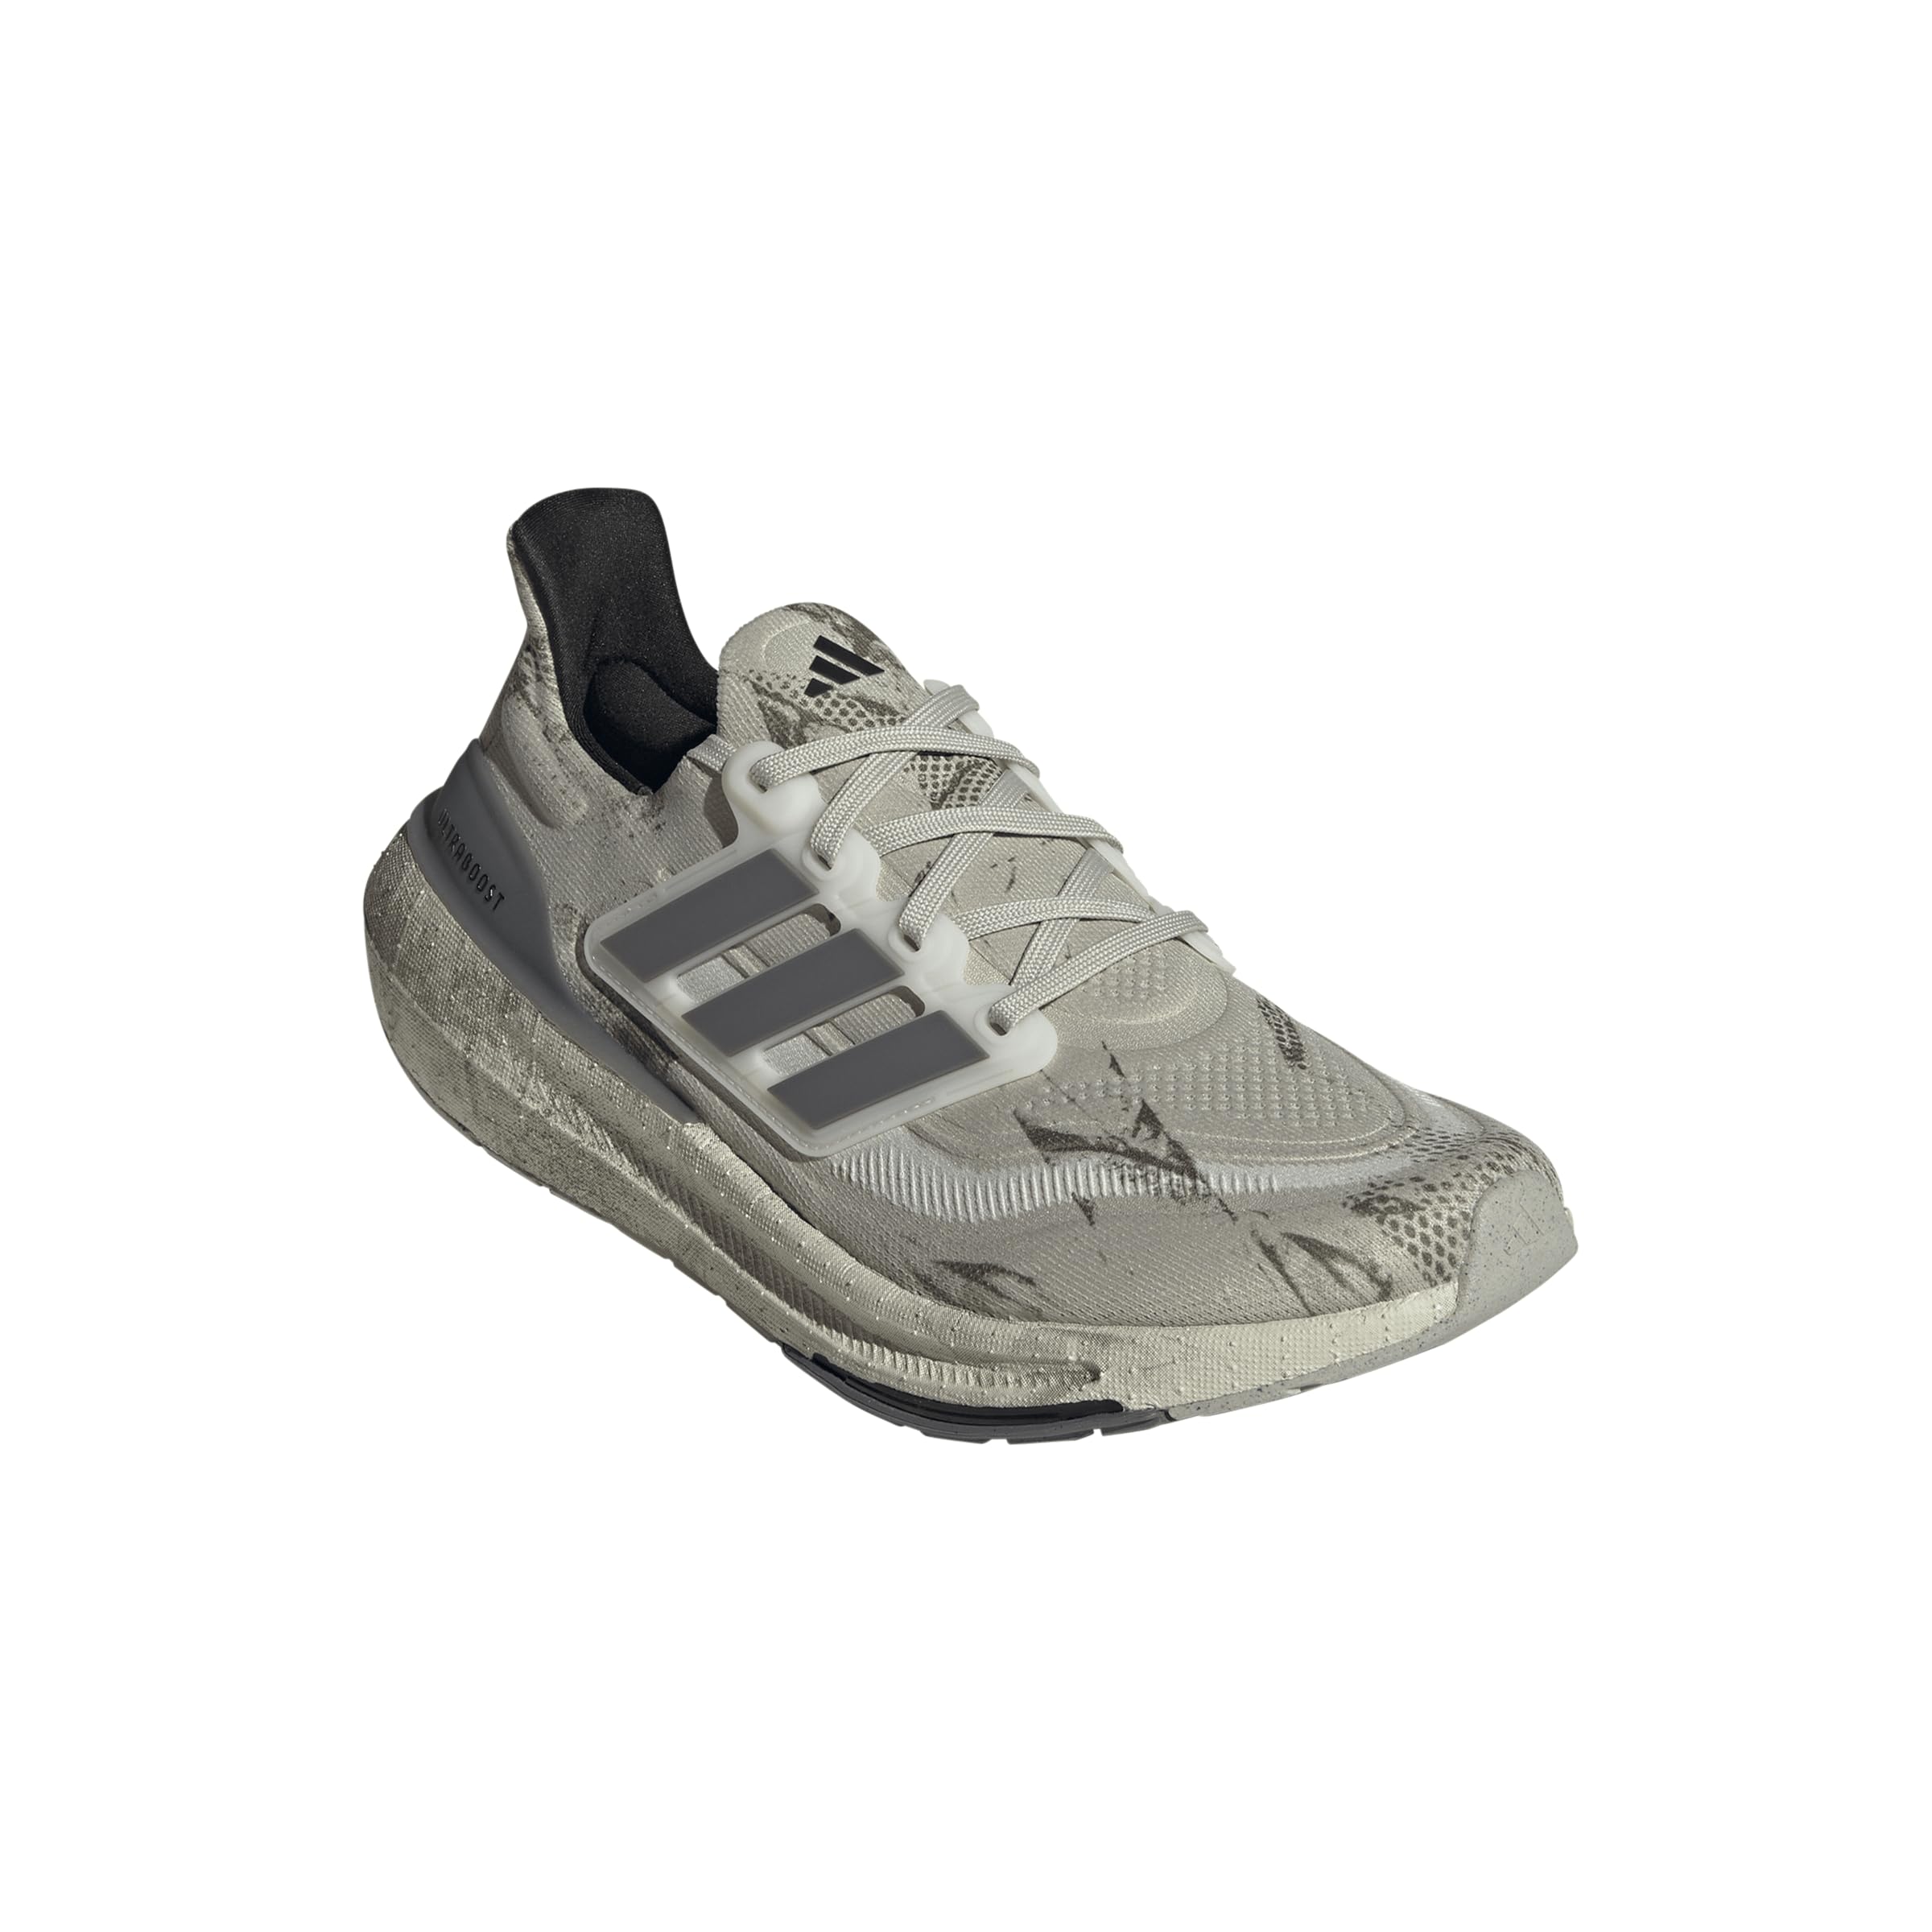 adidas Unisex-Adult Ultraboost Light Sneaker